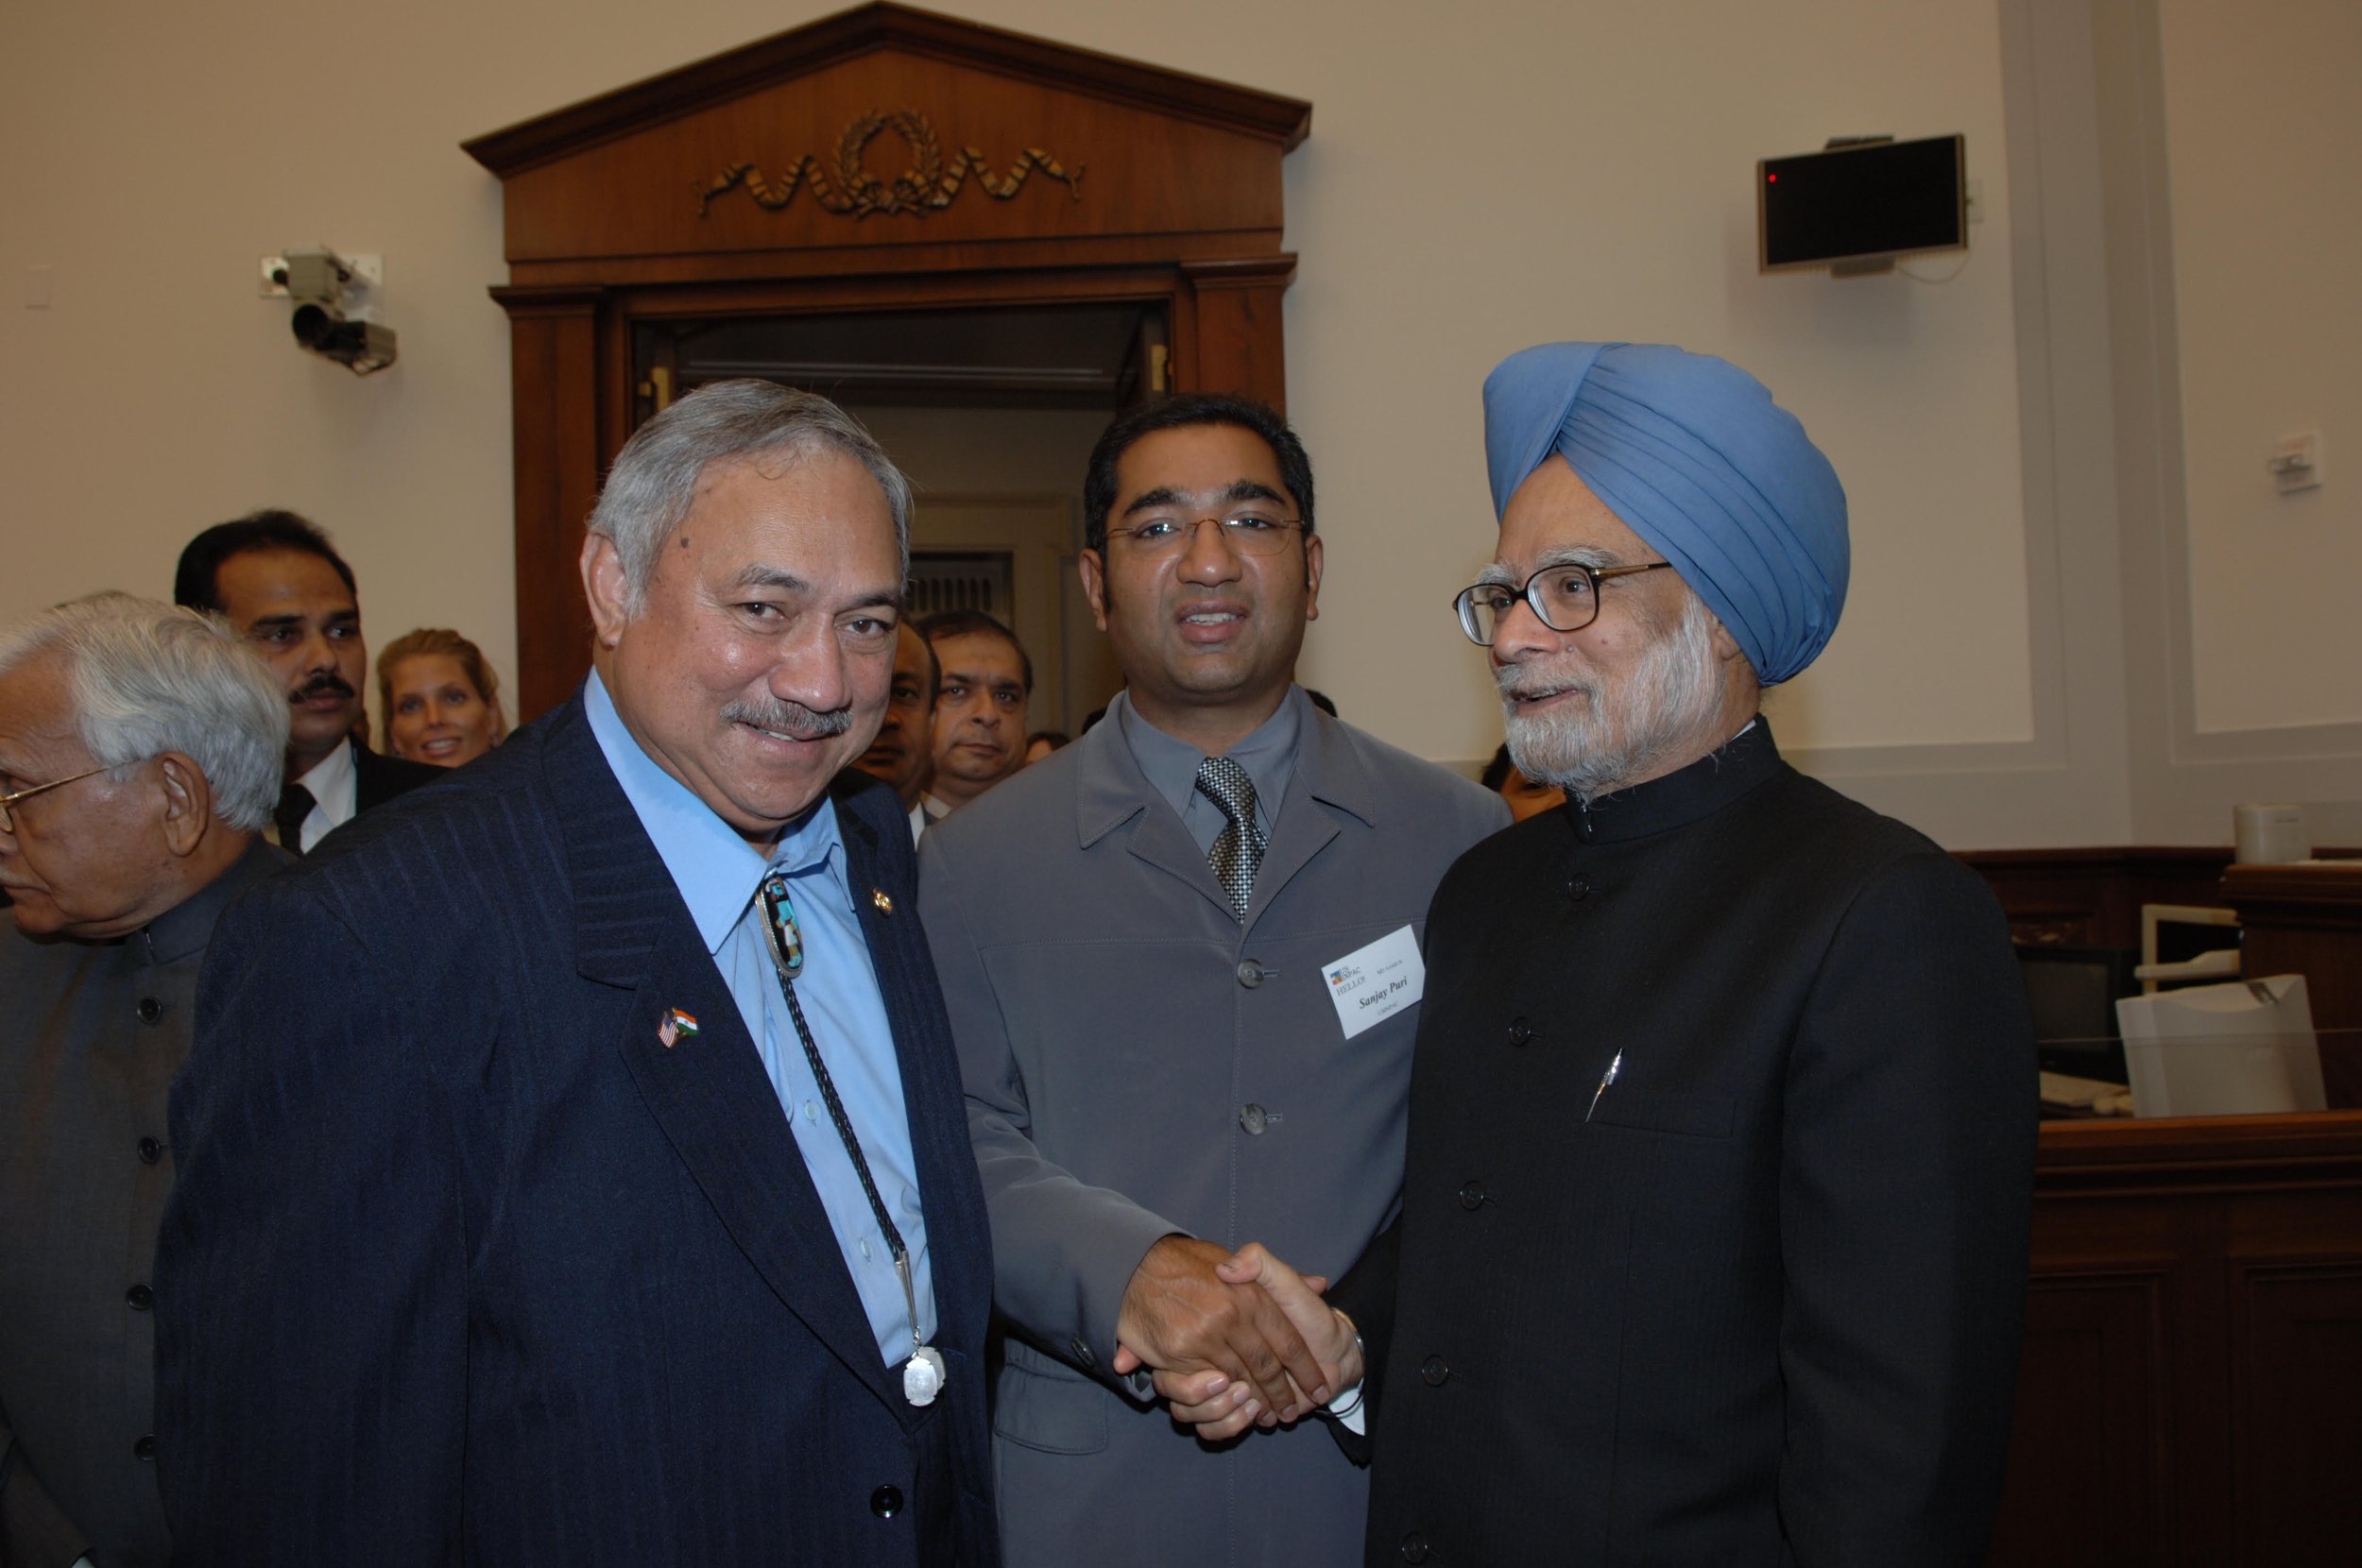 PM Manmohan Singh Picture with Sanjay.jpg